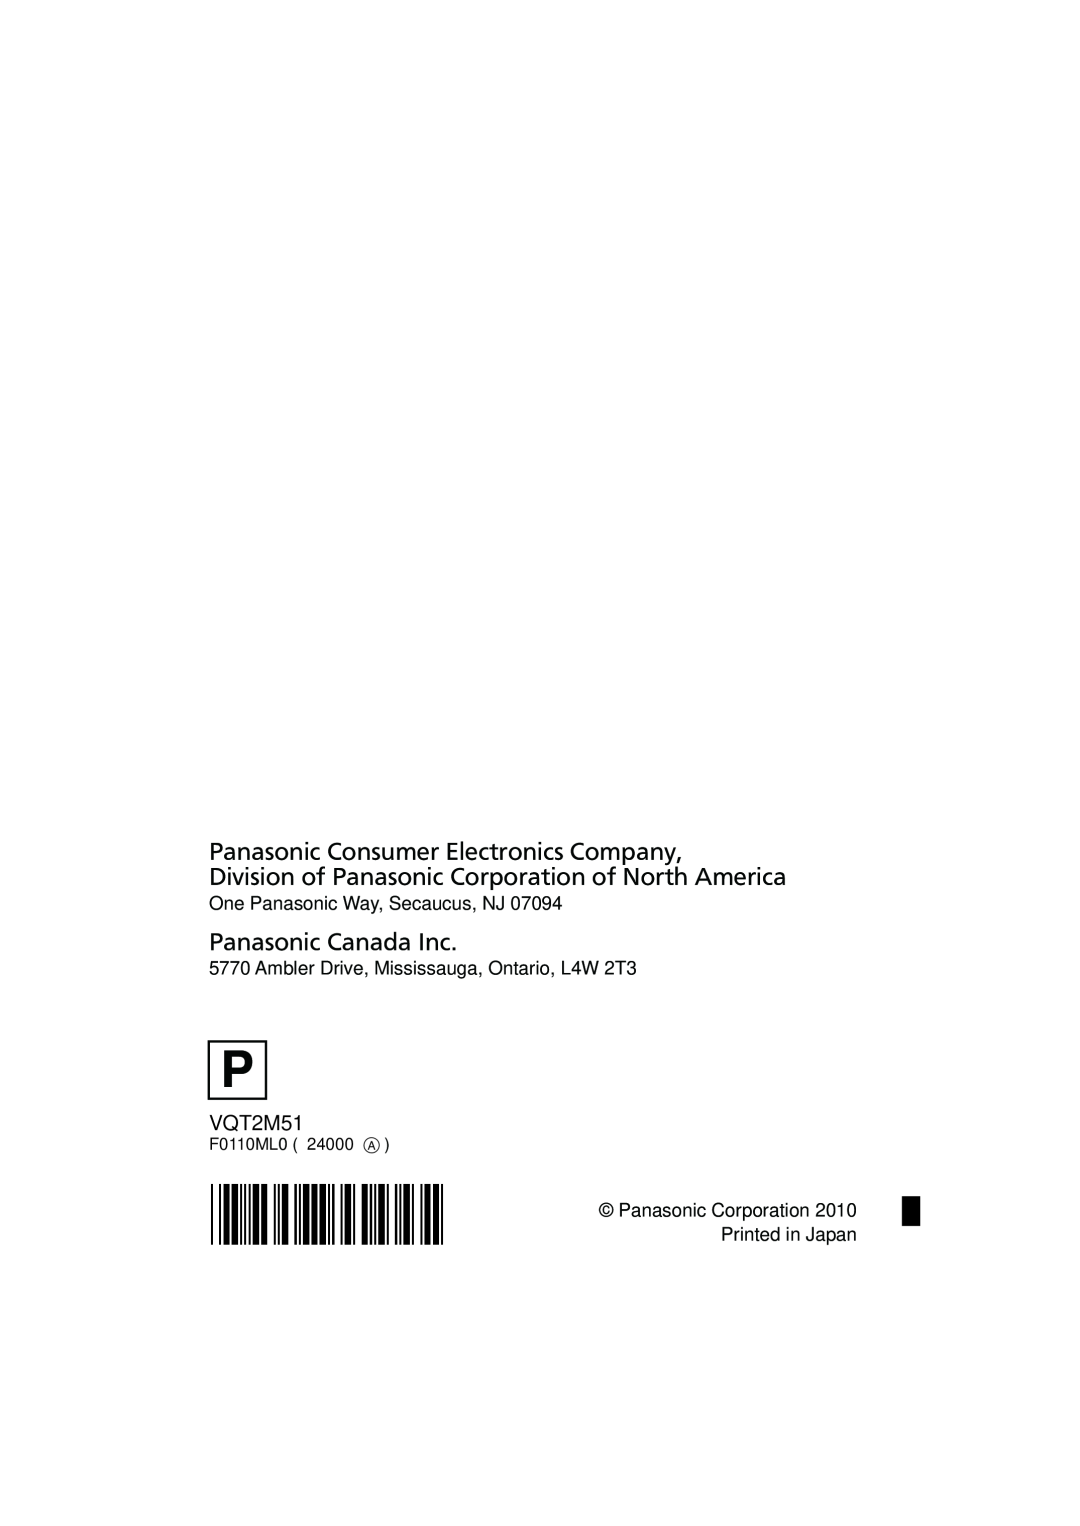 Panasonic HDC-SD60P/PC Panasonic Consumer Electronics Company, Division of Panasonic Corporation of North America, VQT2M51 